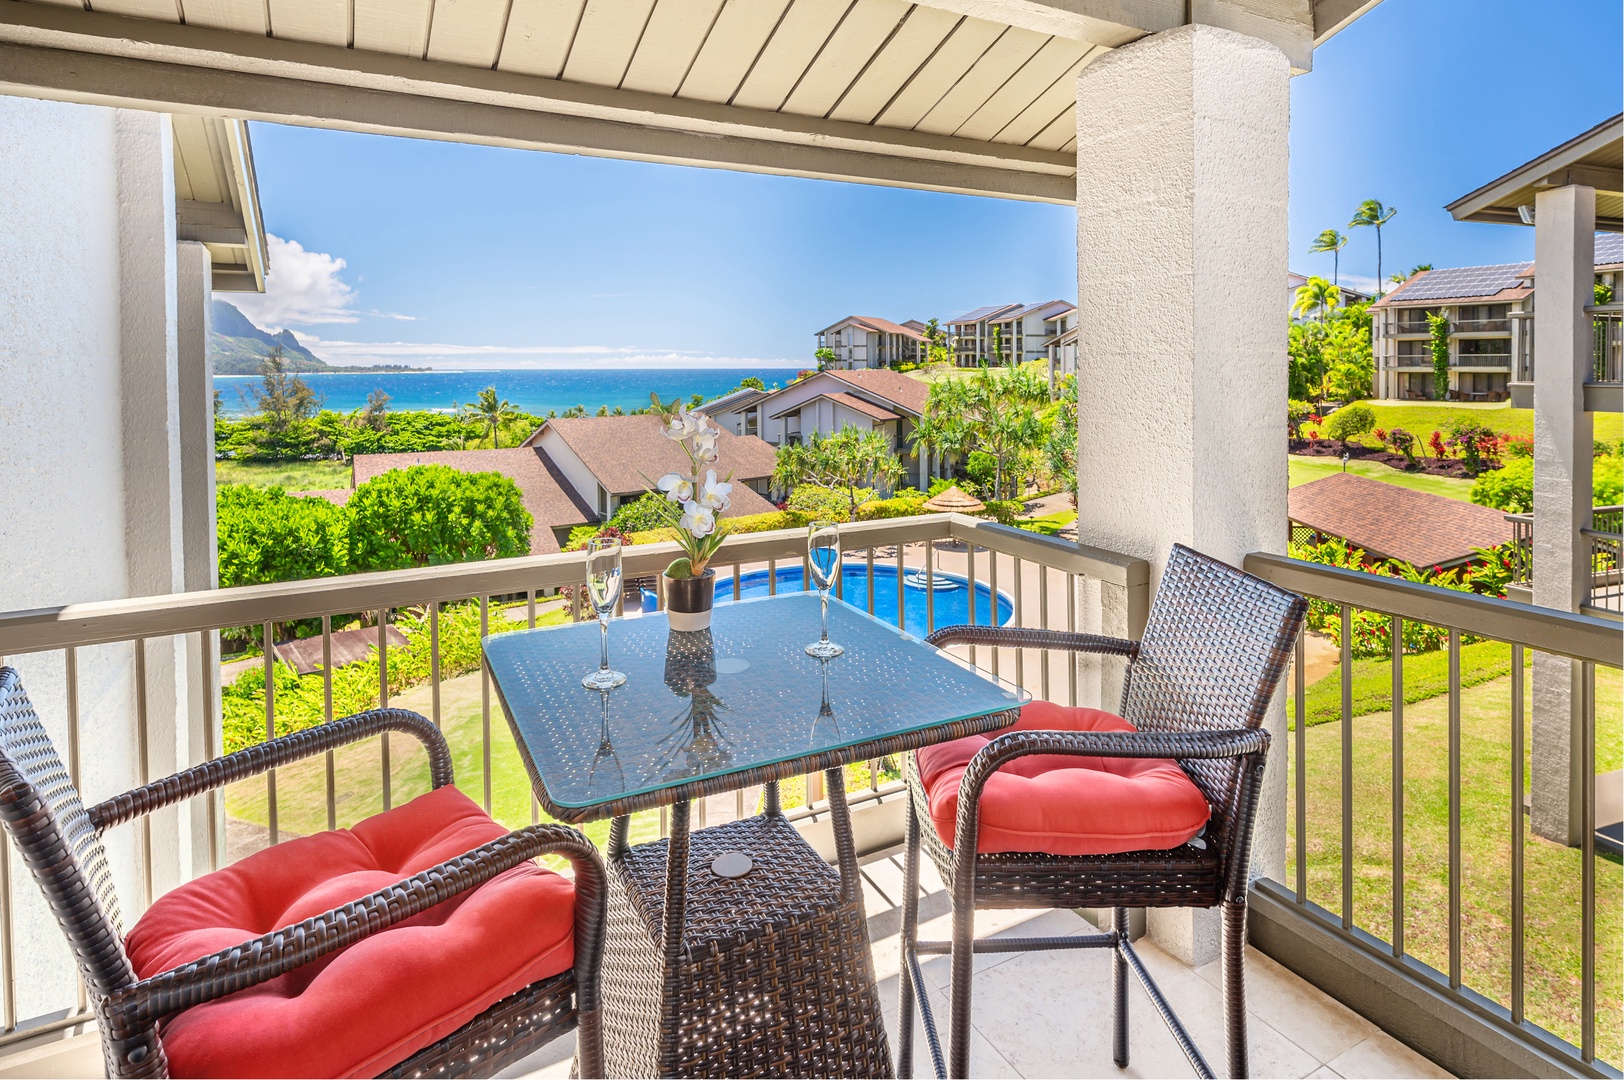 Princeville Vacation Rentals, Hanalei Bay Resort 7308 - Perfect for Honeymooners!